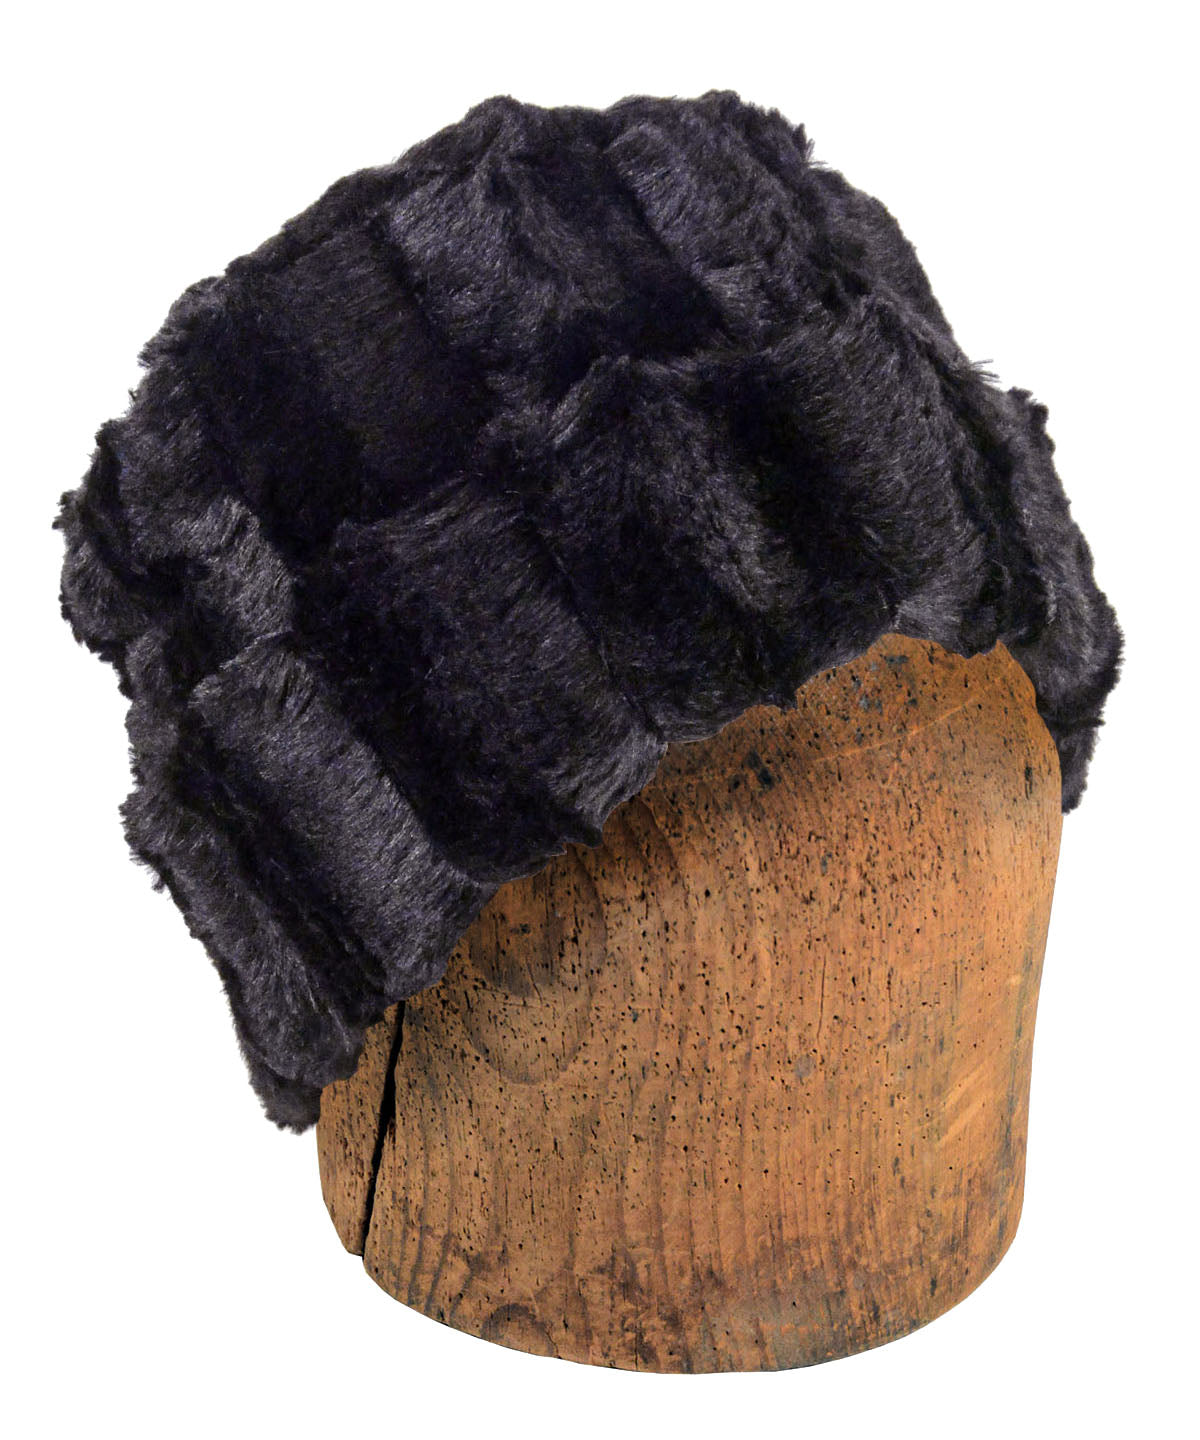 Men's Cuffed Pillbox Solid | Minky in Black Faux Fur | Handmade in Seattle WA by Pandemonium Millinery USA